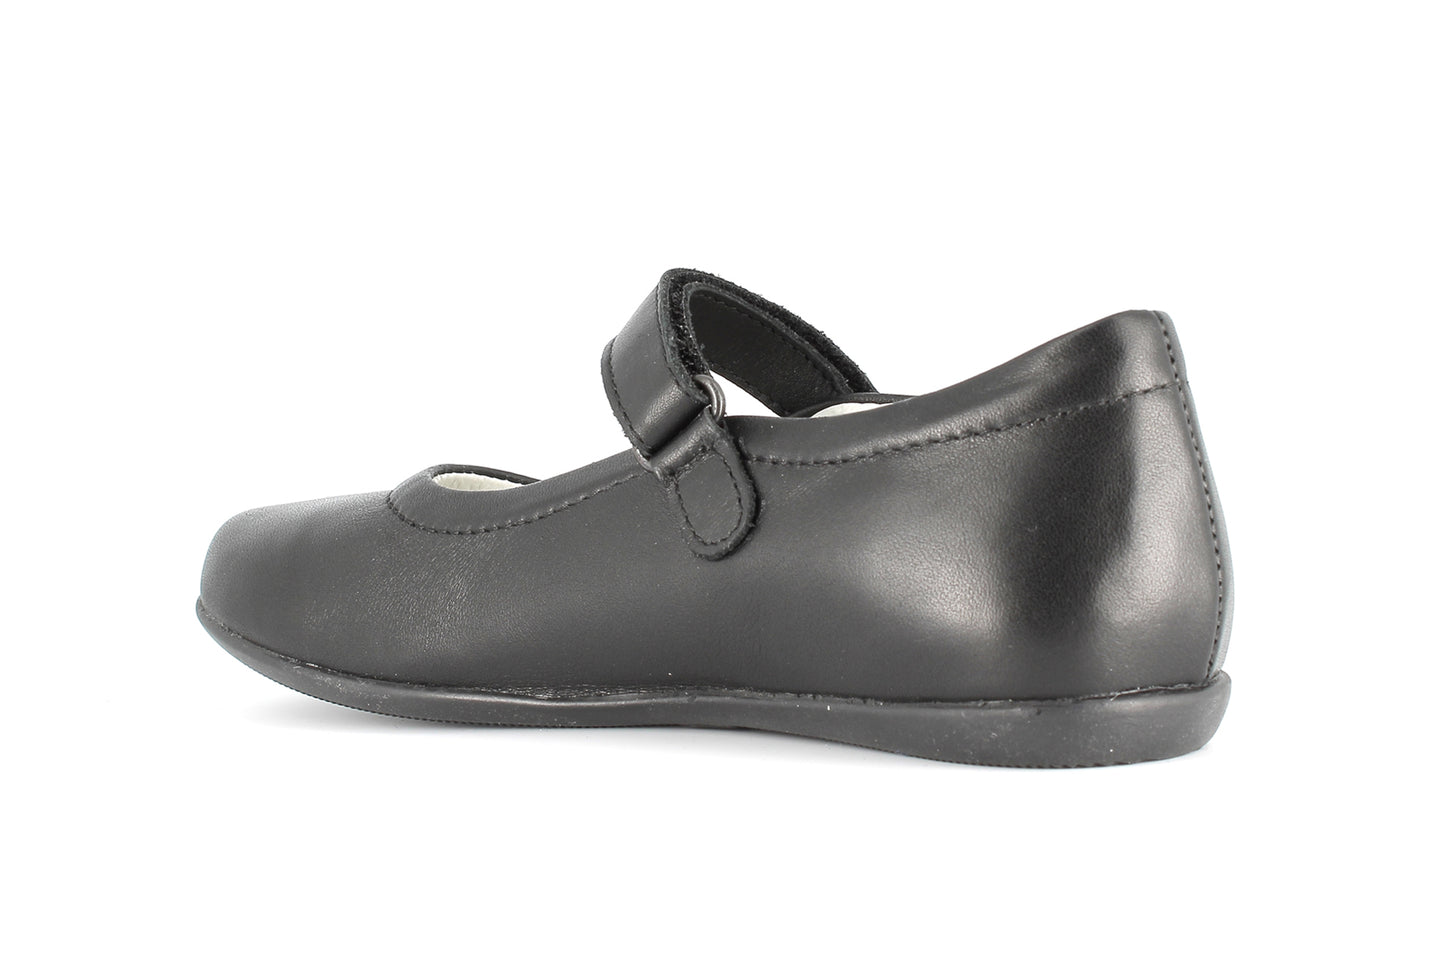 Zura Black Leather Ballet Flat Girls School Shoe